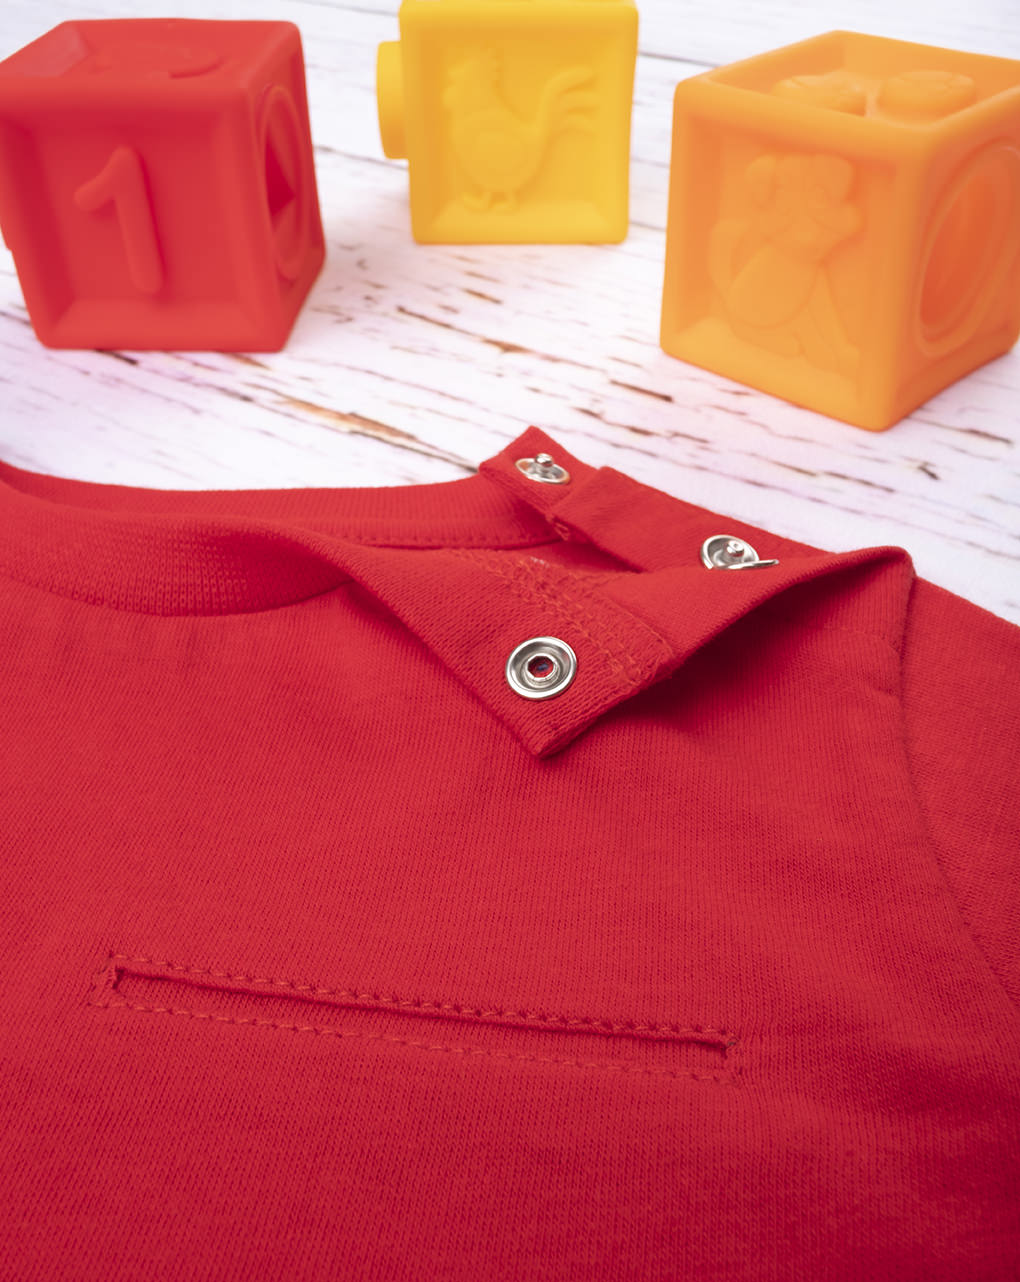 T-shirt boy red - Prénatal